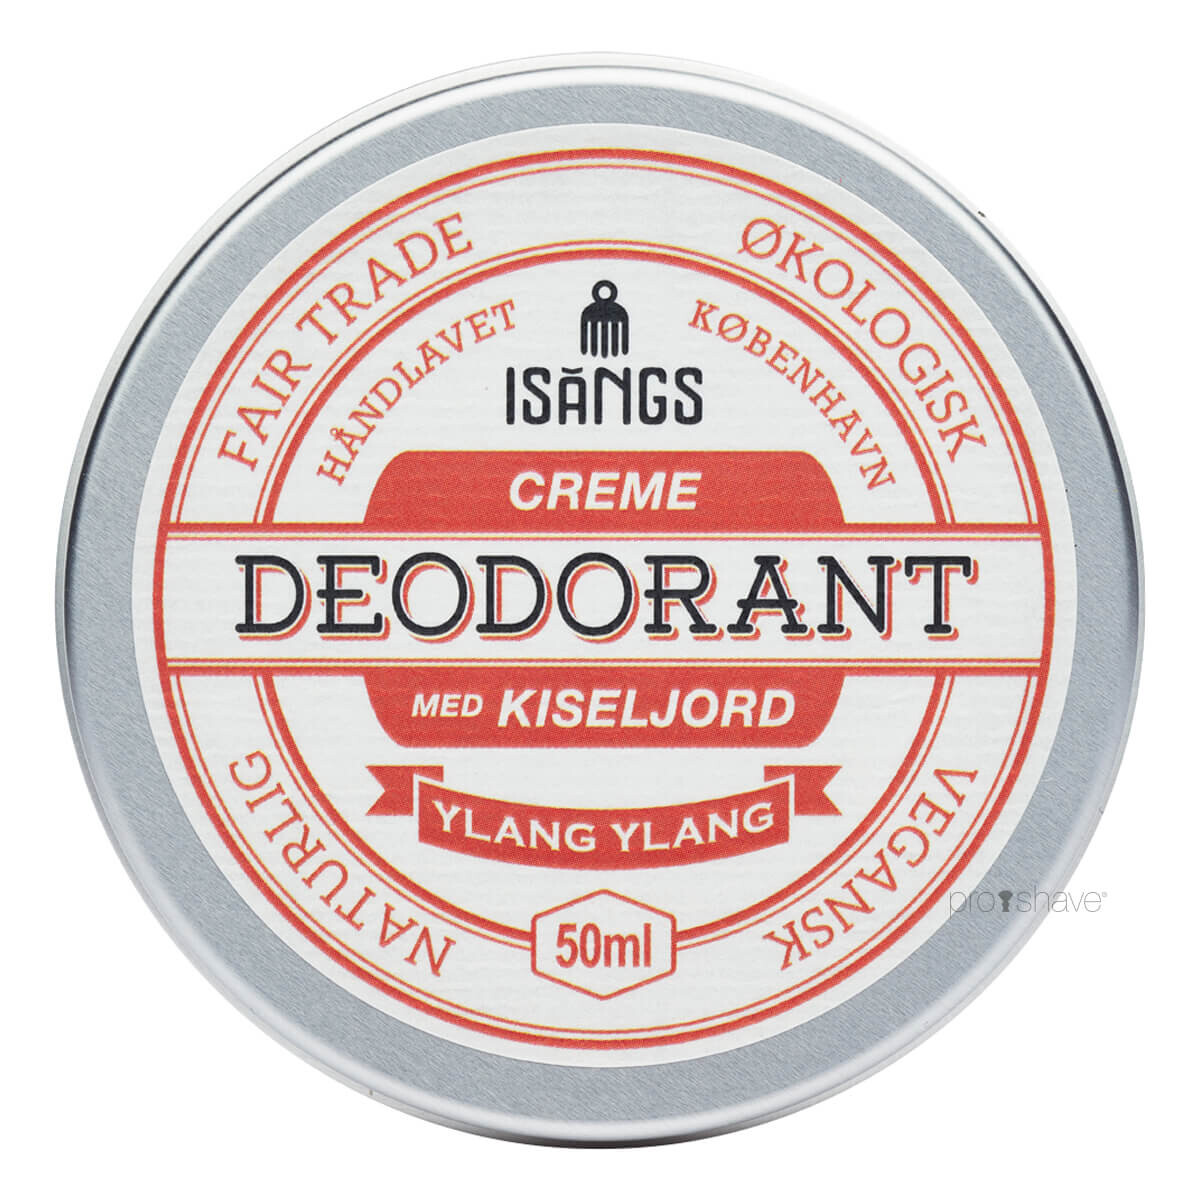 Se Isangs - Creme Deodorant Med Kiseljord - Ylang Ylang hos Proshave